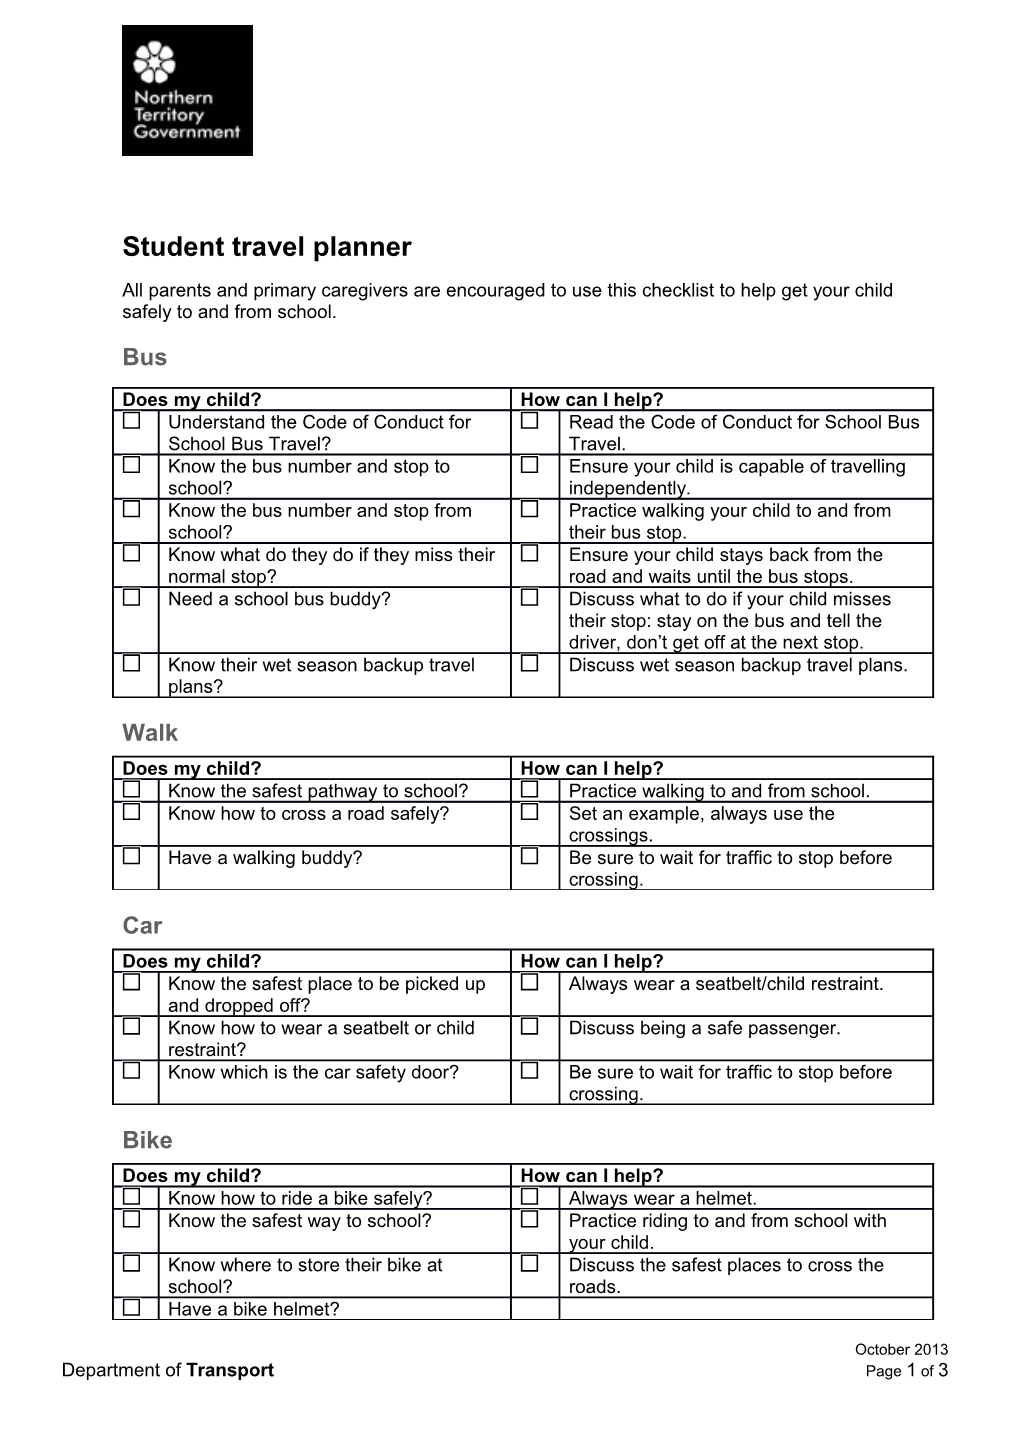 Student Travel Planner